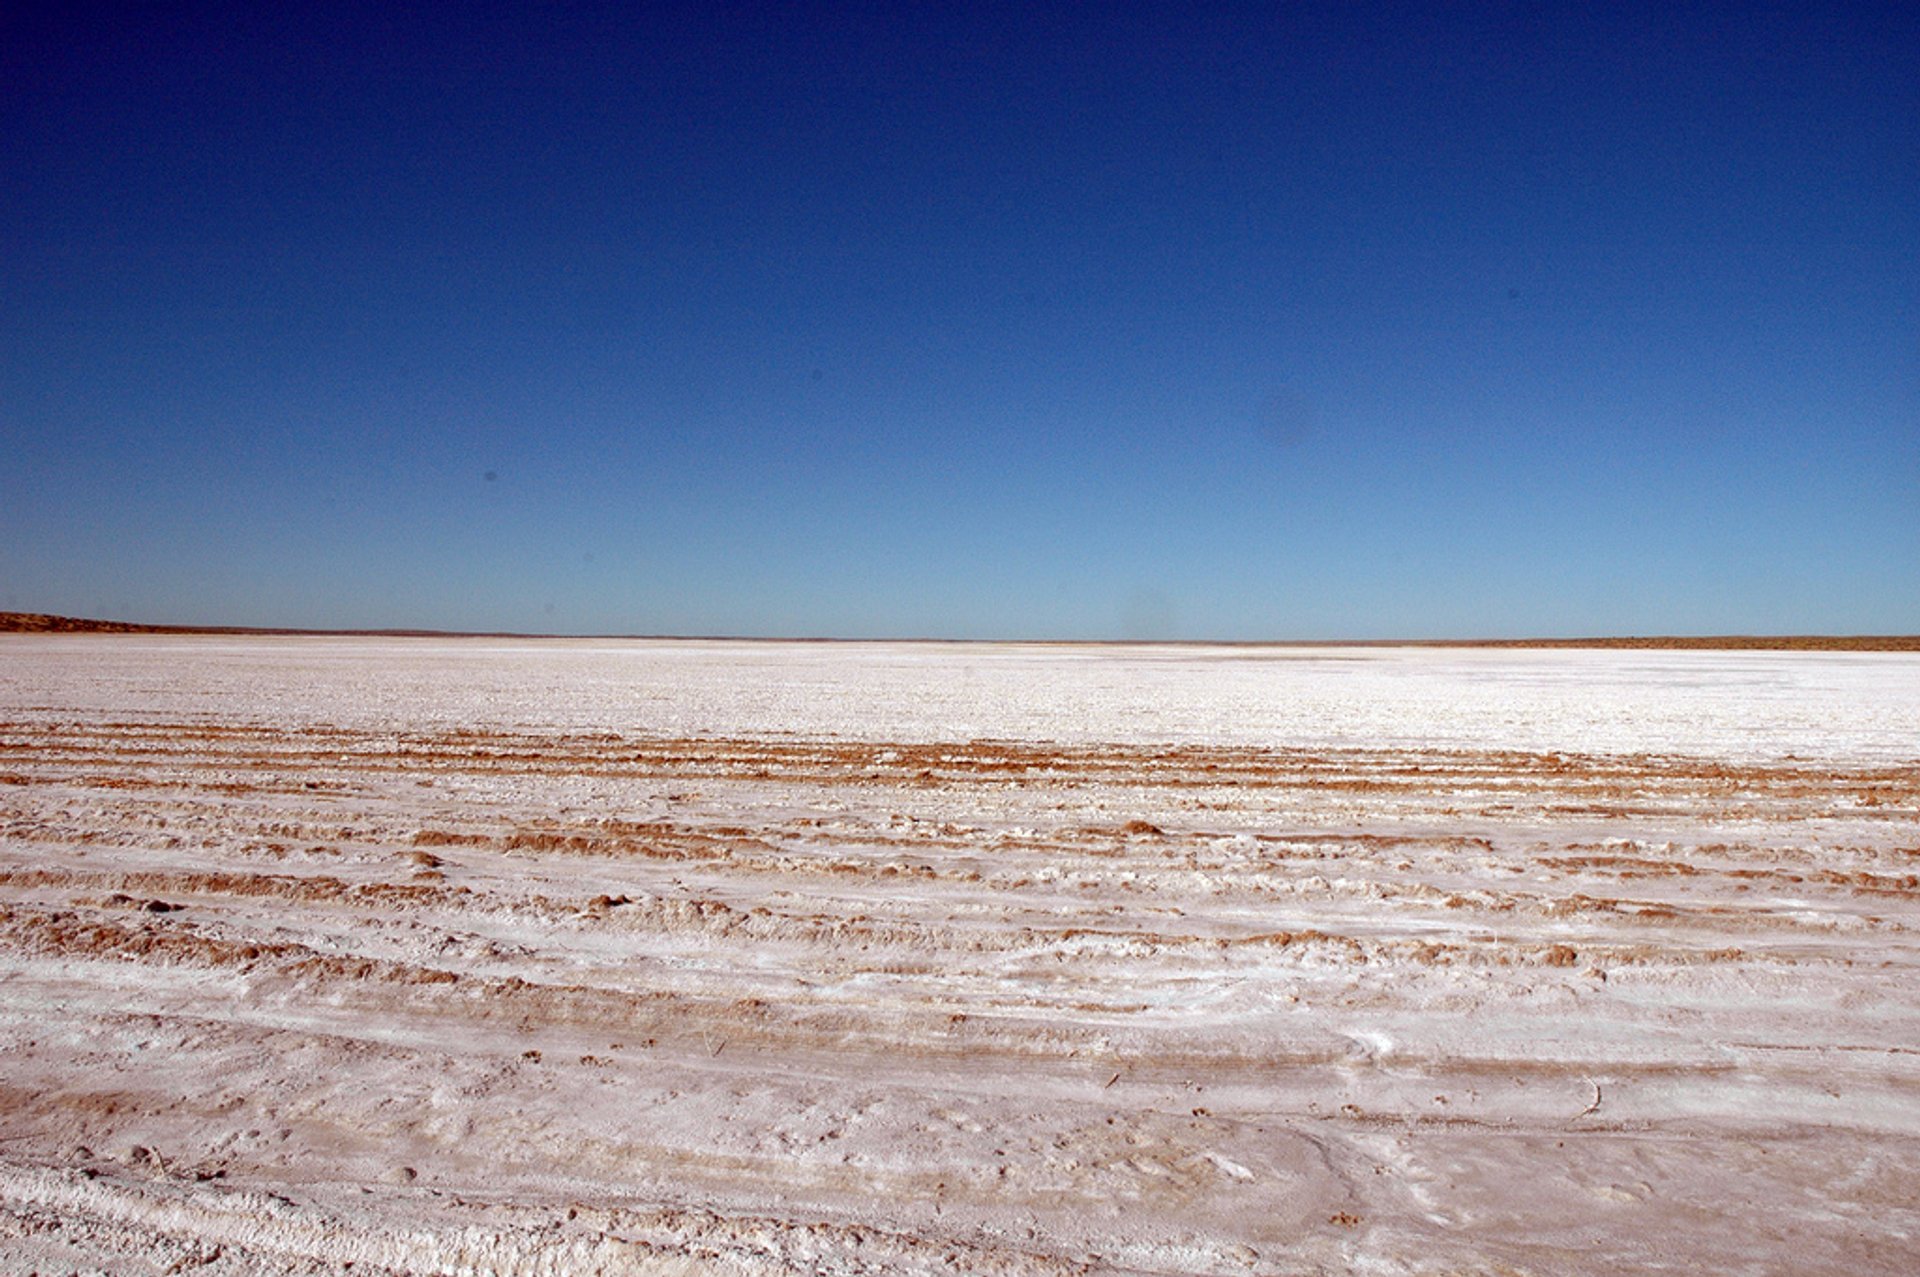 Simpson, the World's Largest Sand Dune Desert